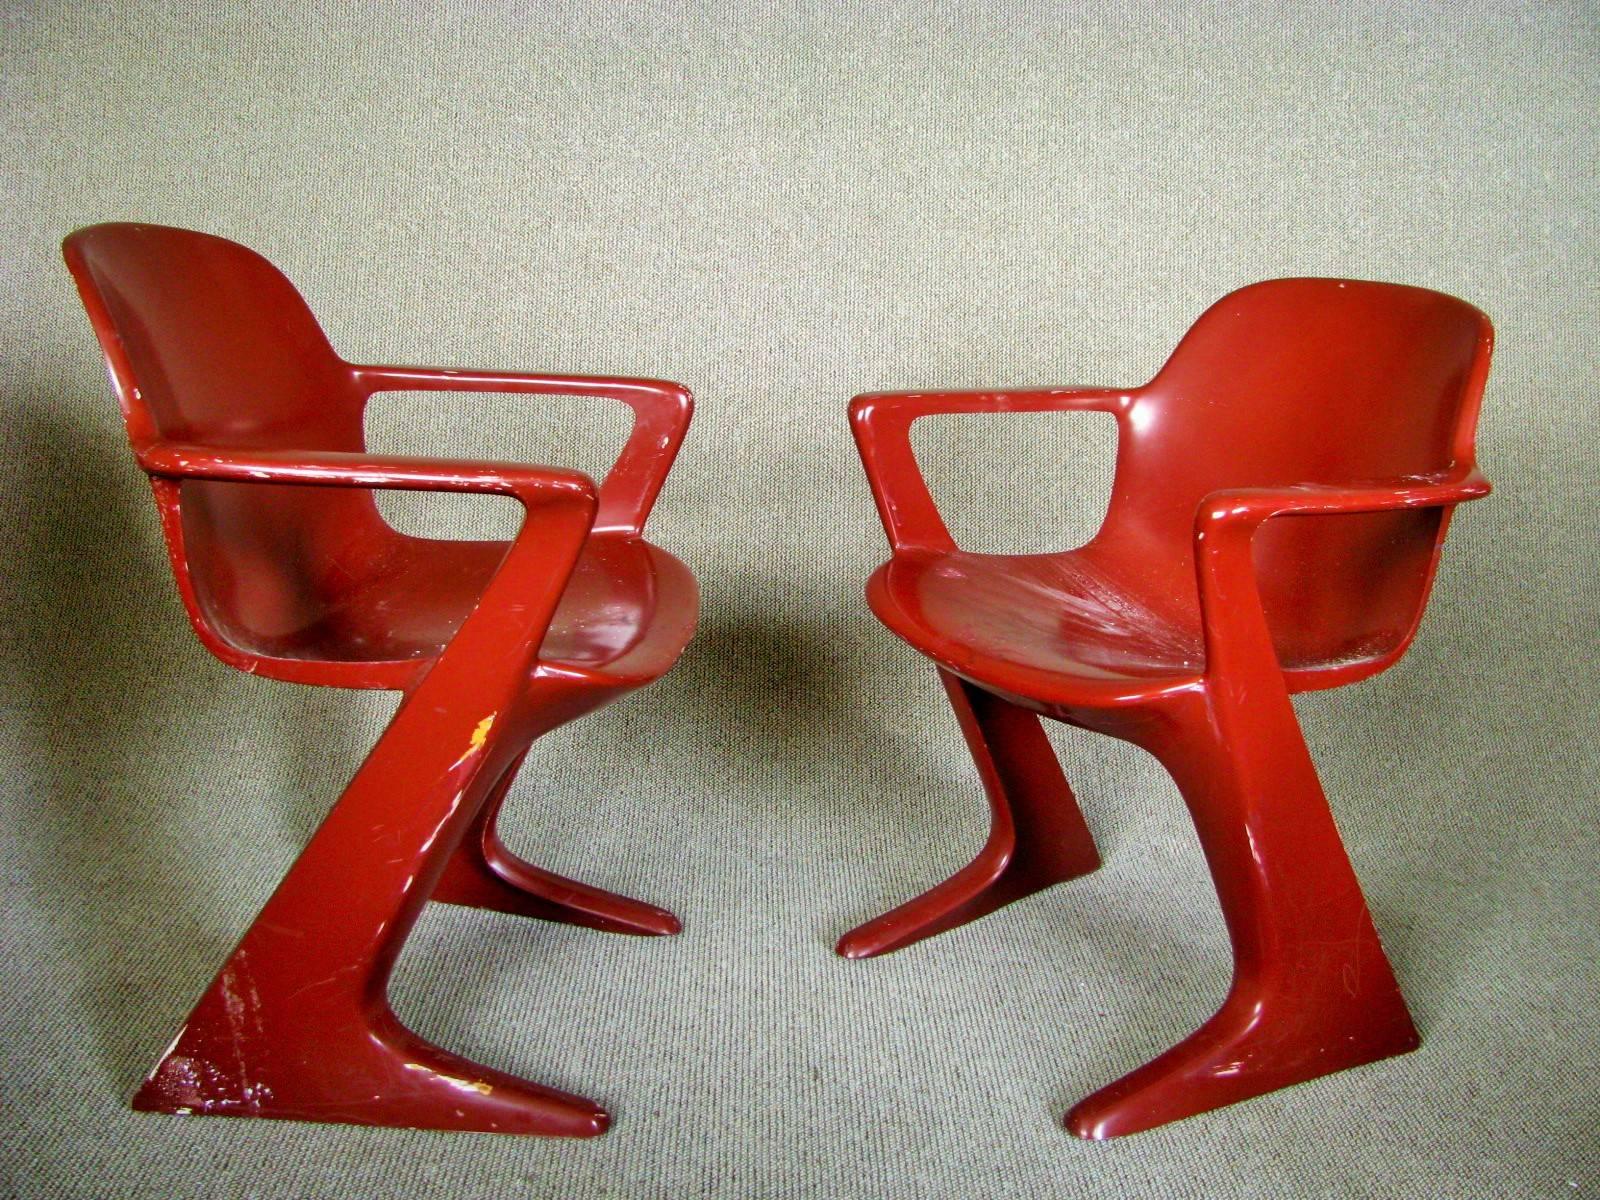 Fiberglass Midcentury German Kangoroo Chair by Ernst Moeckl, 1968 For Sale